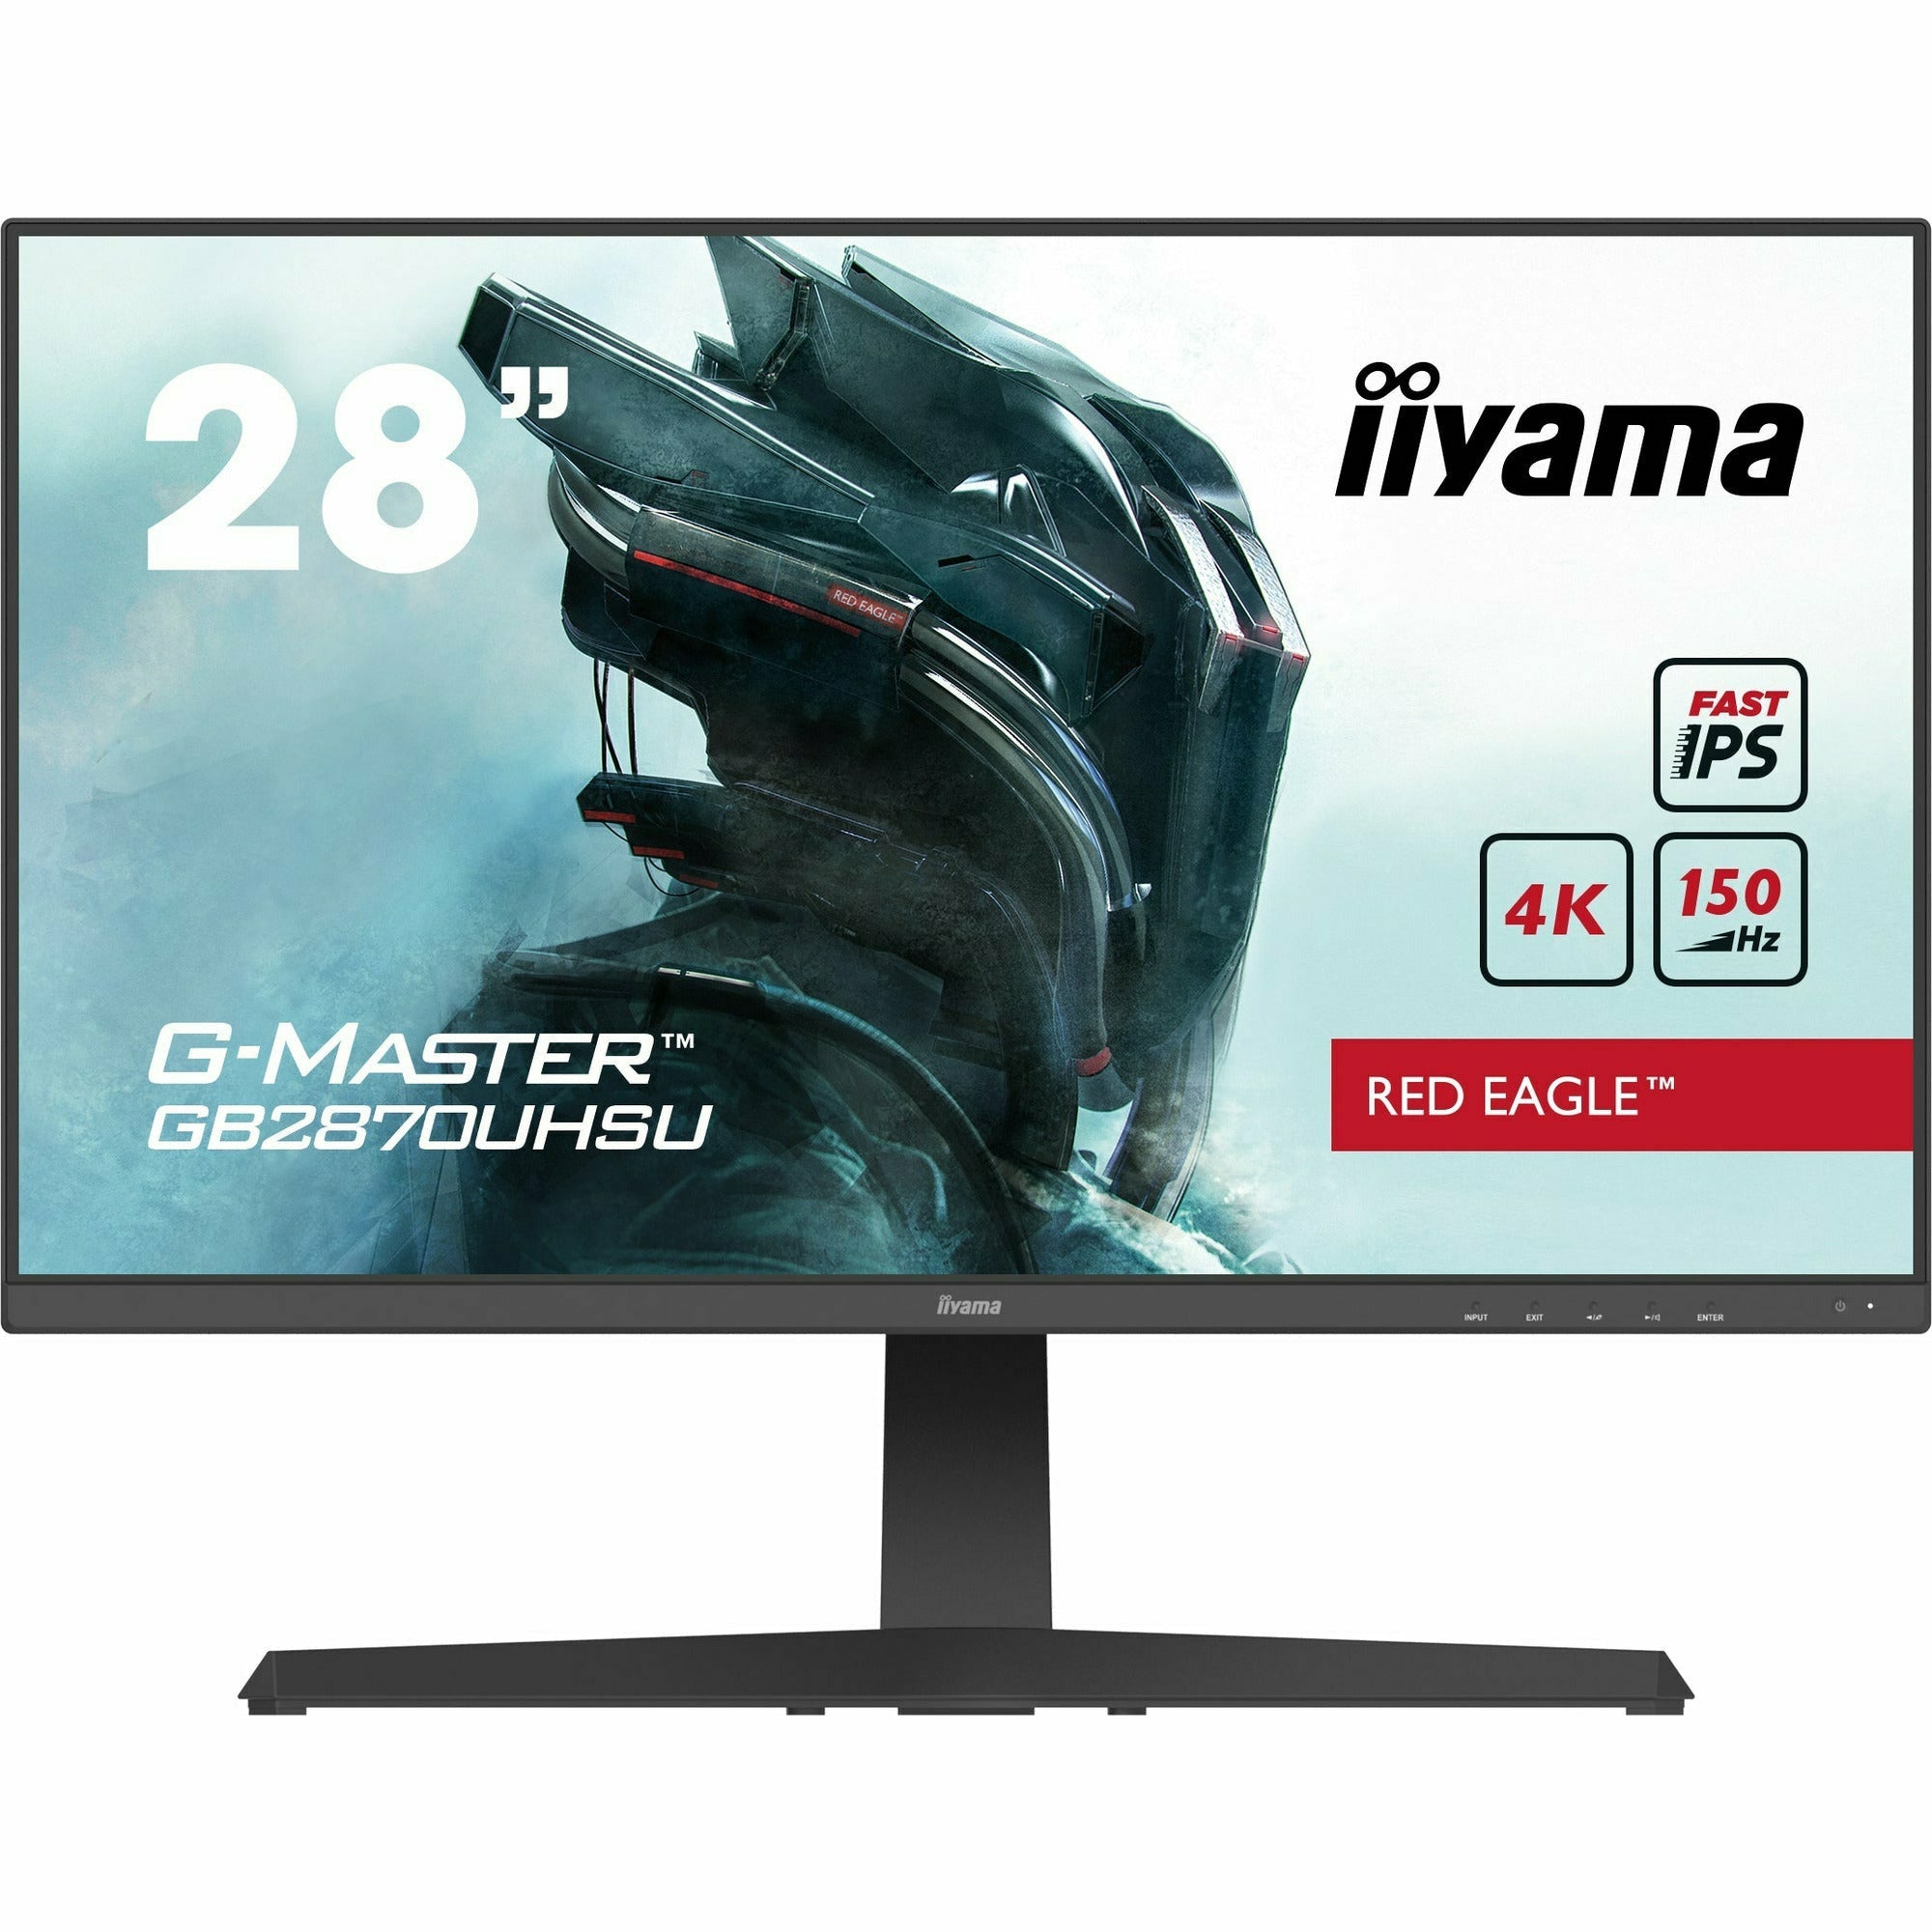 iiyama G-Master GB2870UHSU-B1 Red Eagle 28" Fast (FLC) IPS, 150Hz, 1ms, 4K UHD 3840x2160 Gaming Display with Height Adjustable Stand